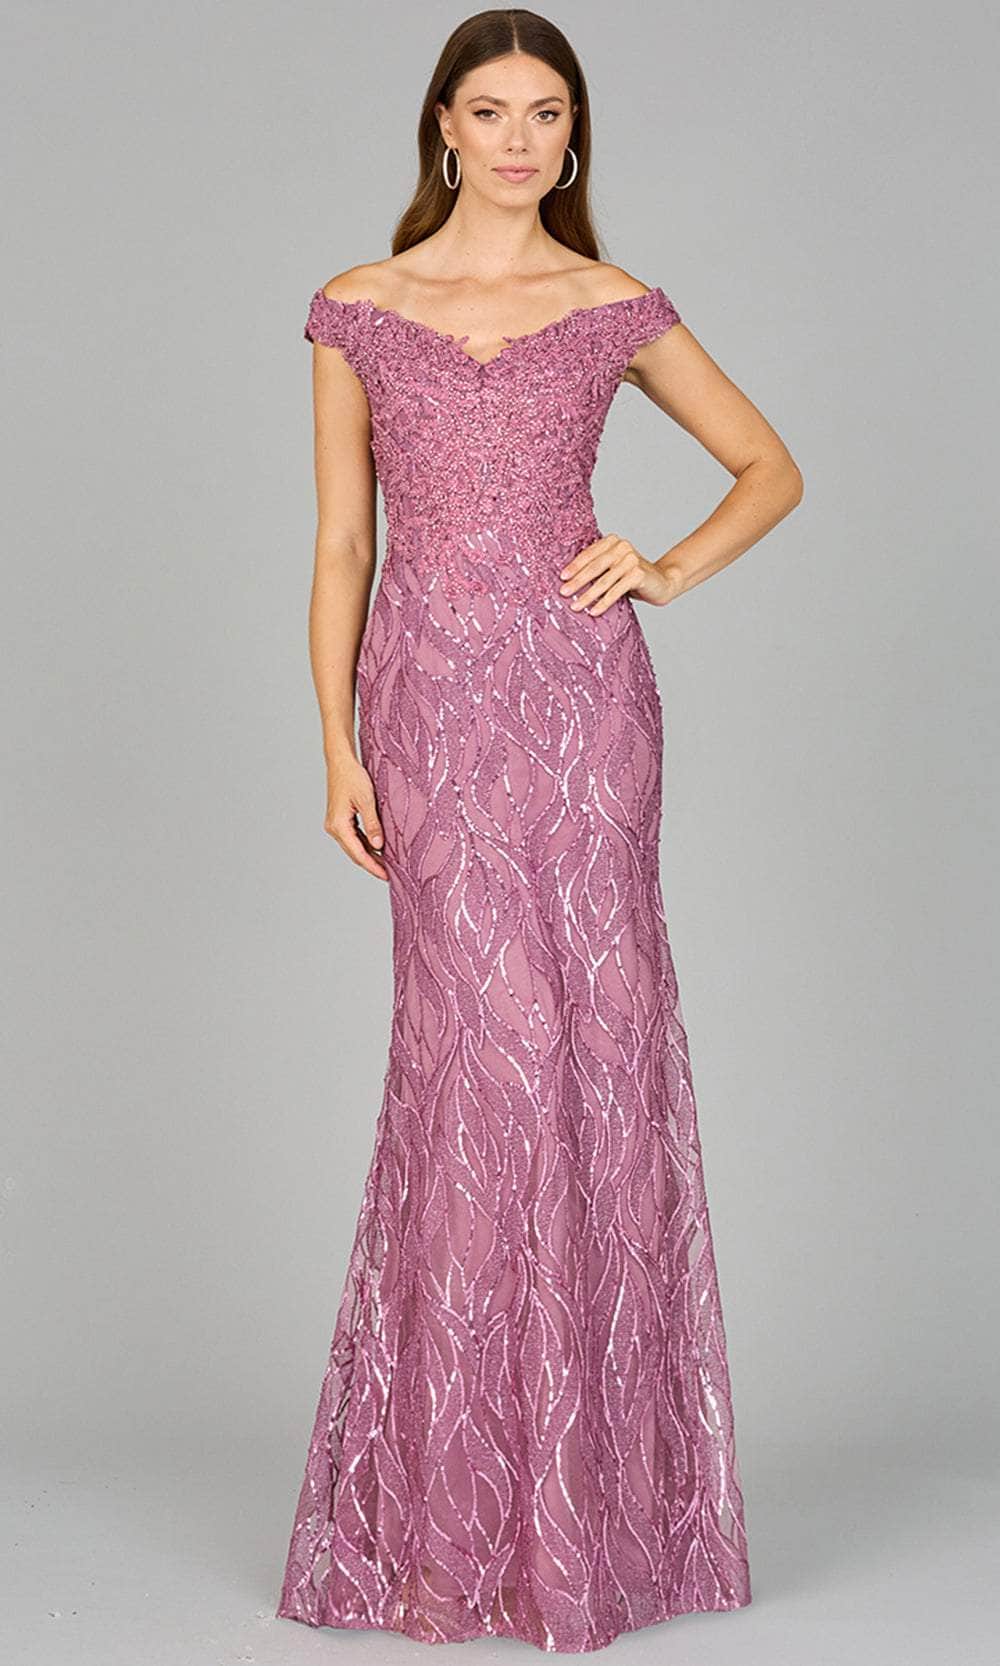 Lara Dresses 29045 - Lace Bodice Evening Dress Special Occasion Dresses 